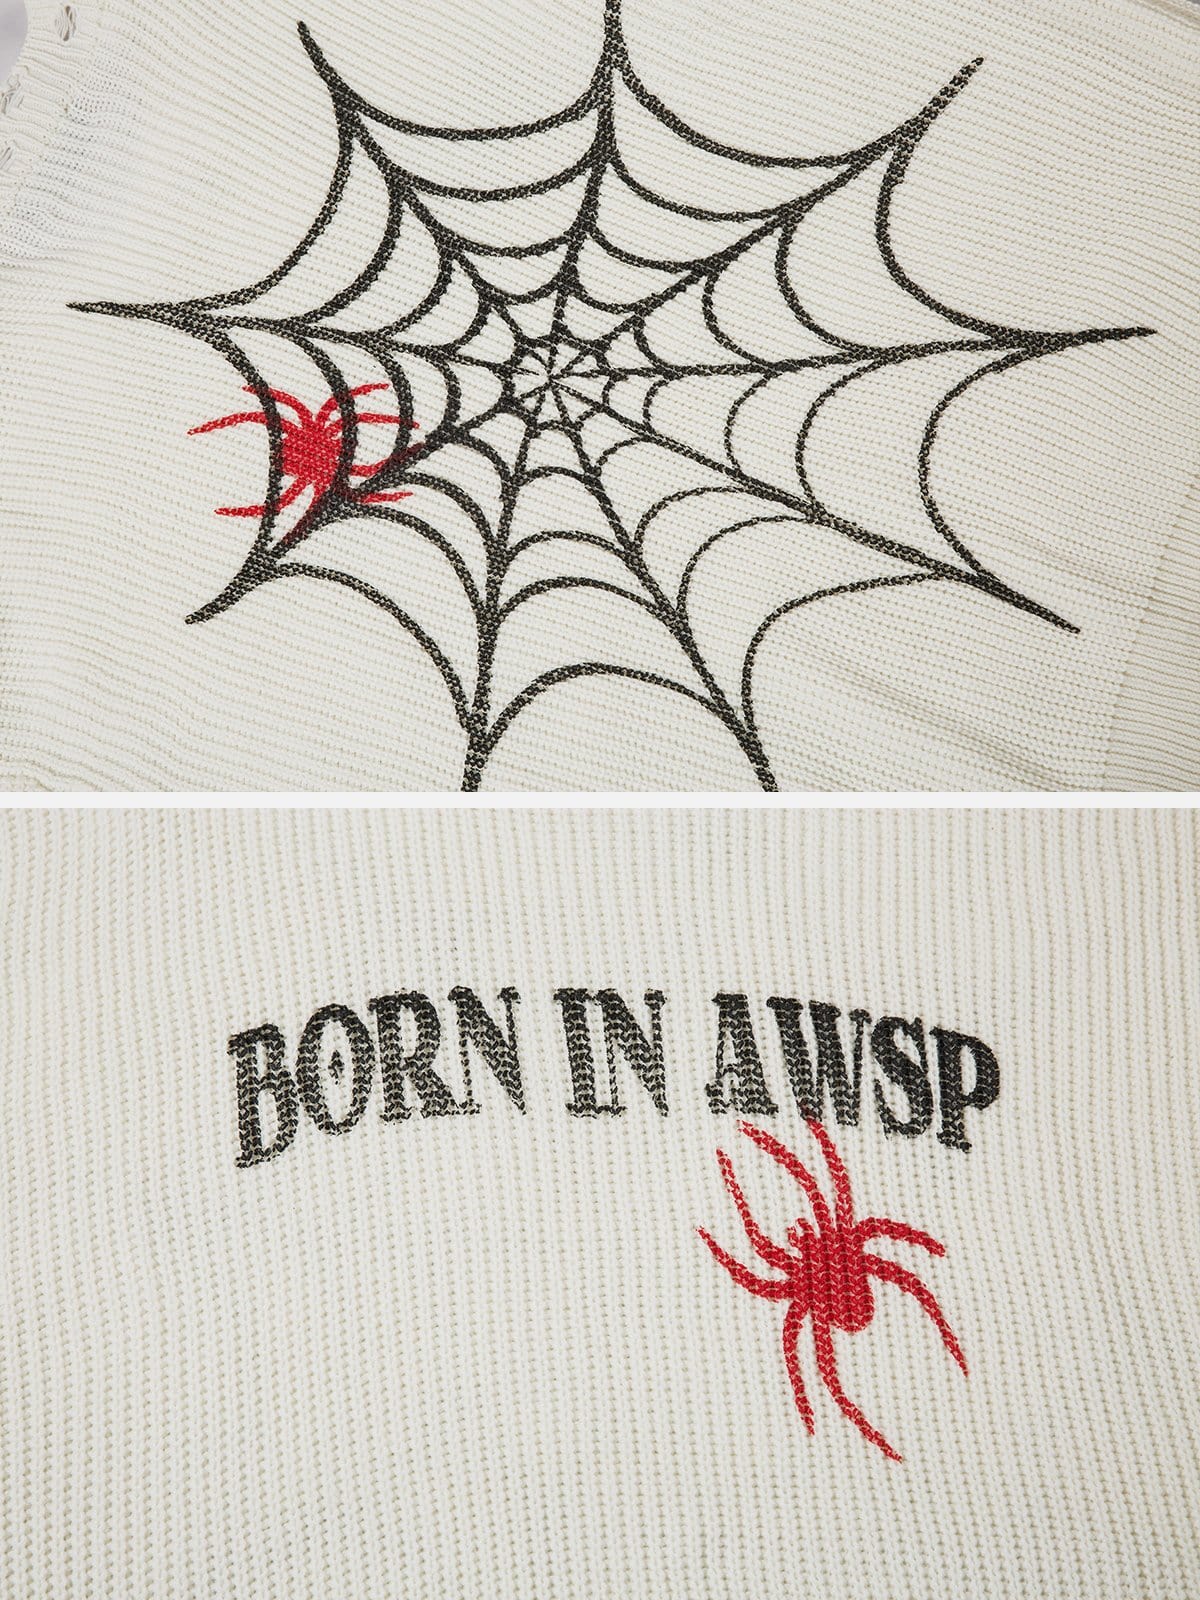 NEV Distressed Spider Jacquard Sweater